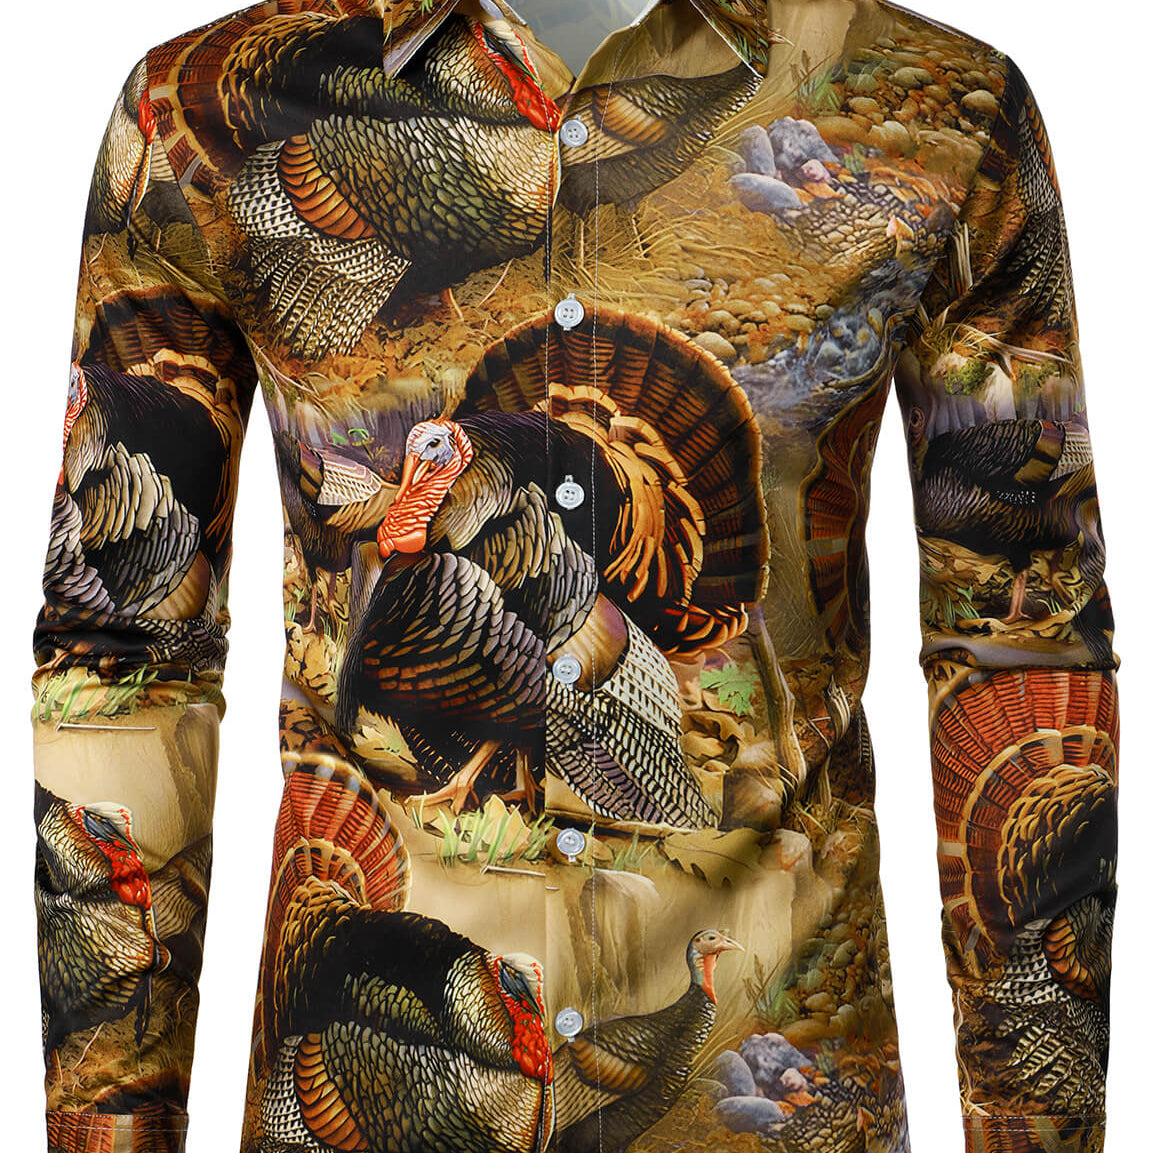 Men's Turkey Thanksgiving Festival Animal Holiday Button Up Long Sleeve Shirt